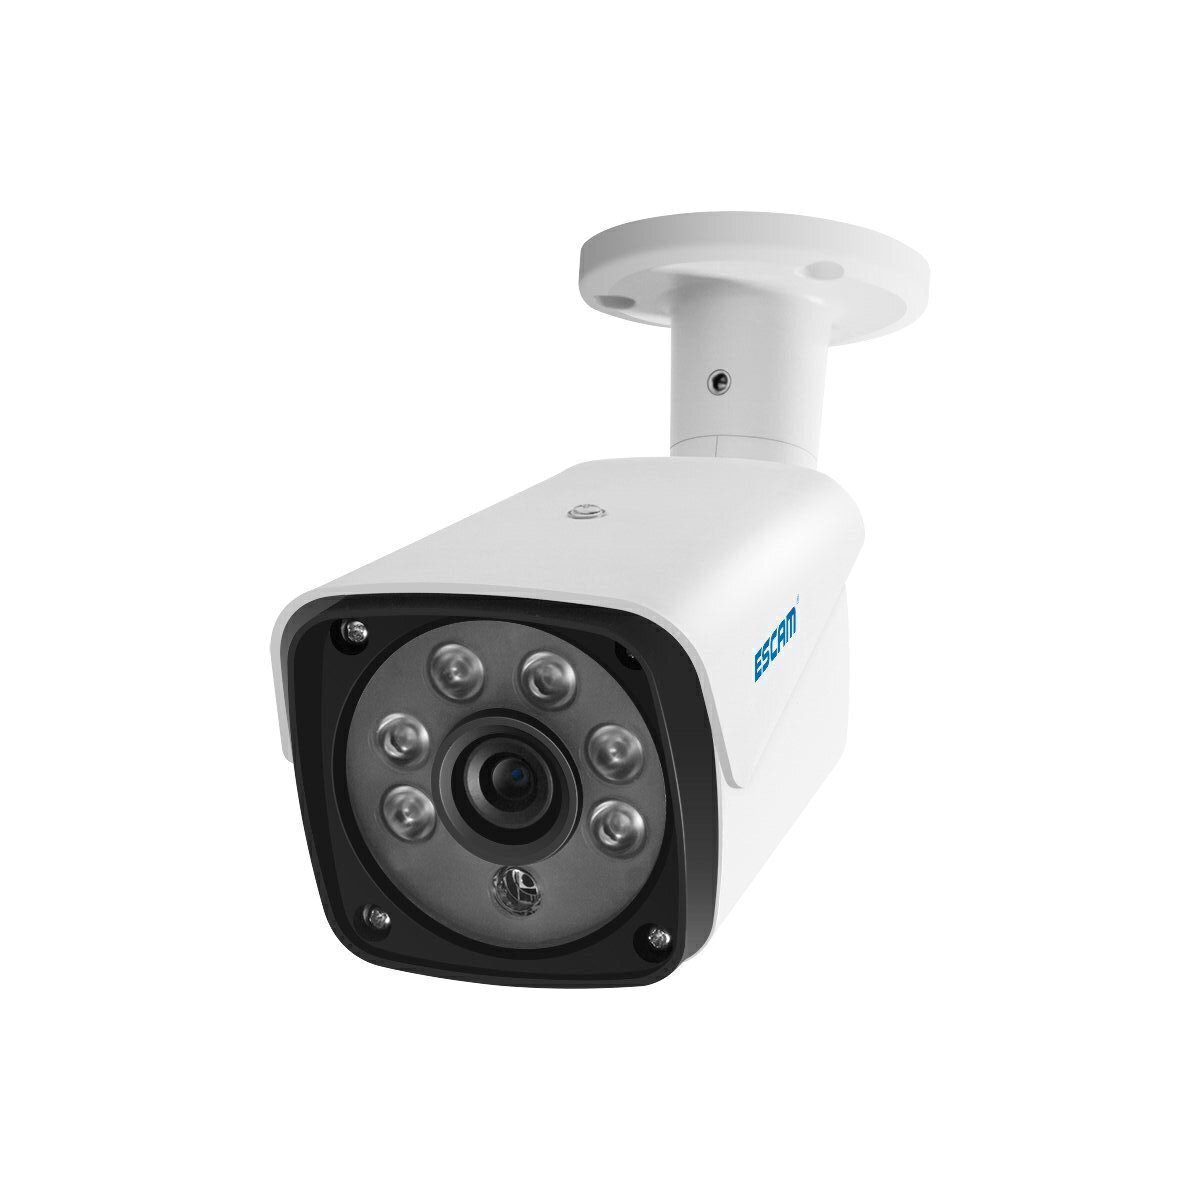 ESCAM QH002 HD 1080P IP Camera ONVIF H.265 P2P Outdoor Waterproof IR Bullet with Smart Analysis Function Surveillance Security Camera 19